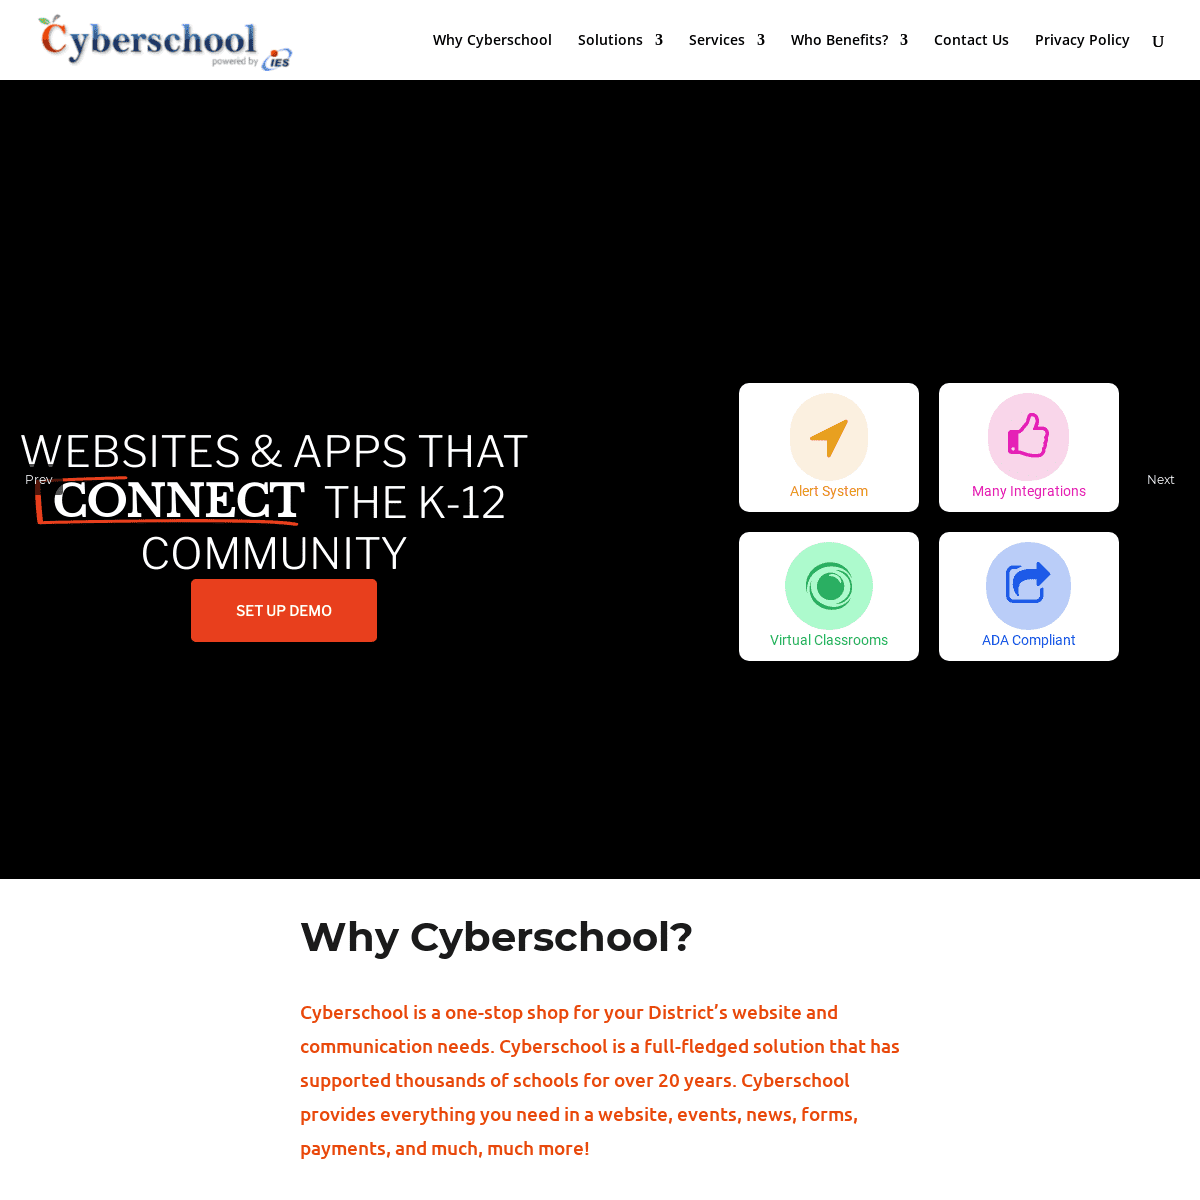 A complete backup of https://cyberschool.com